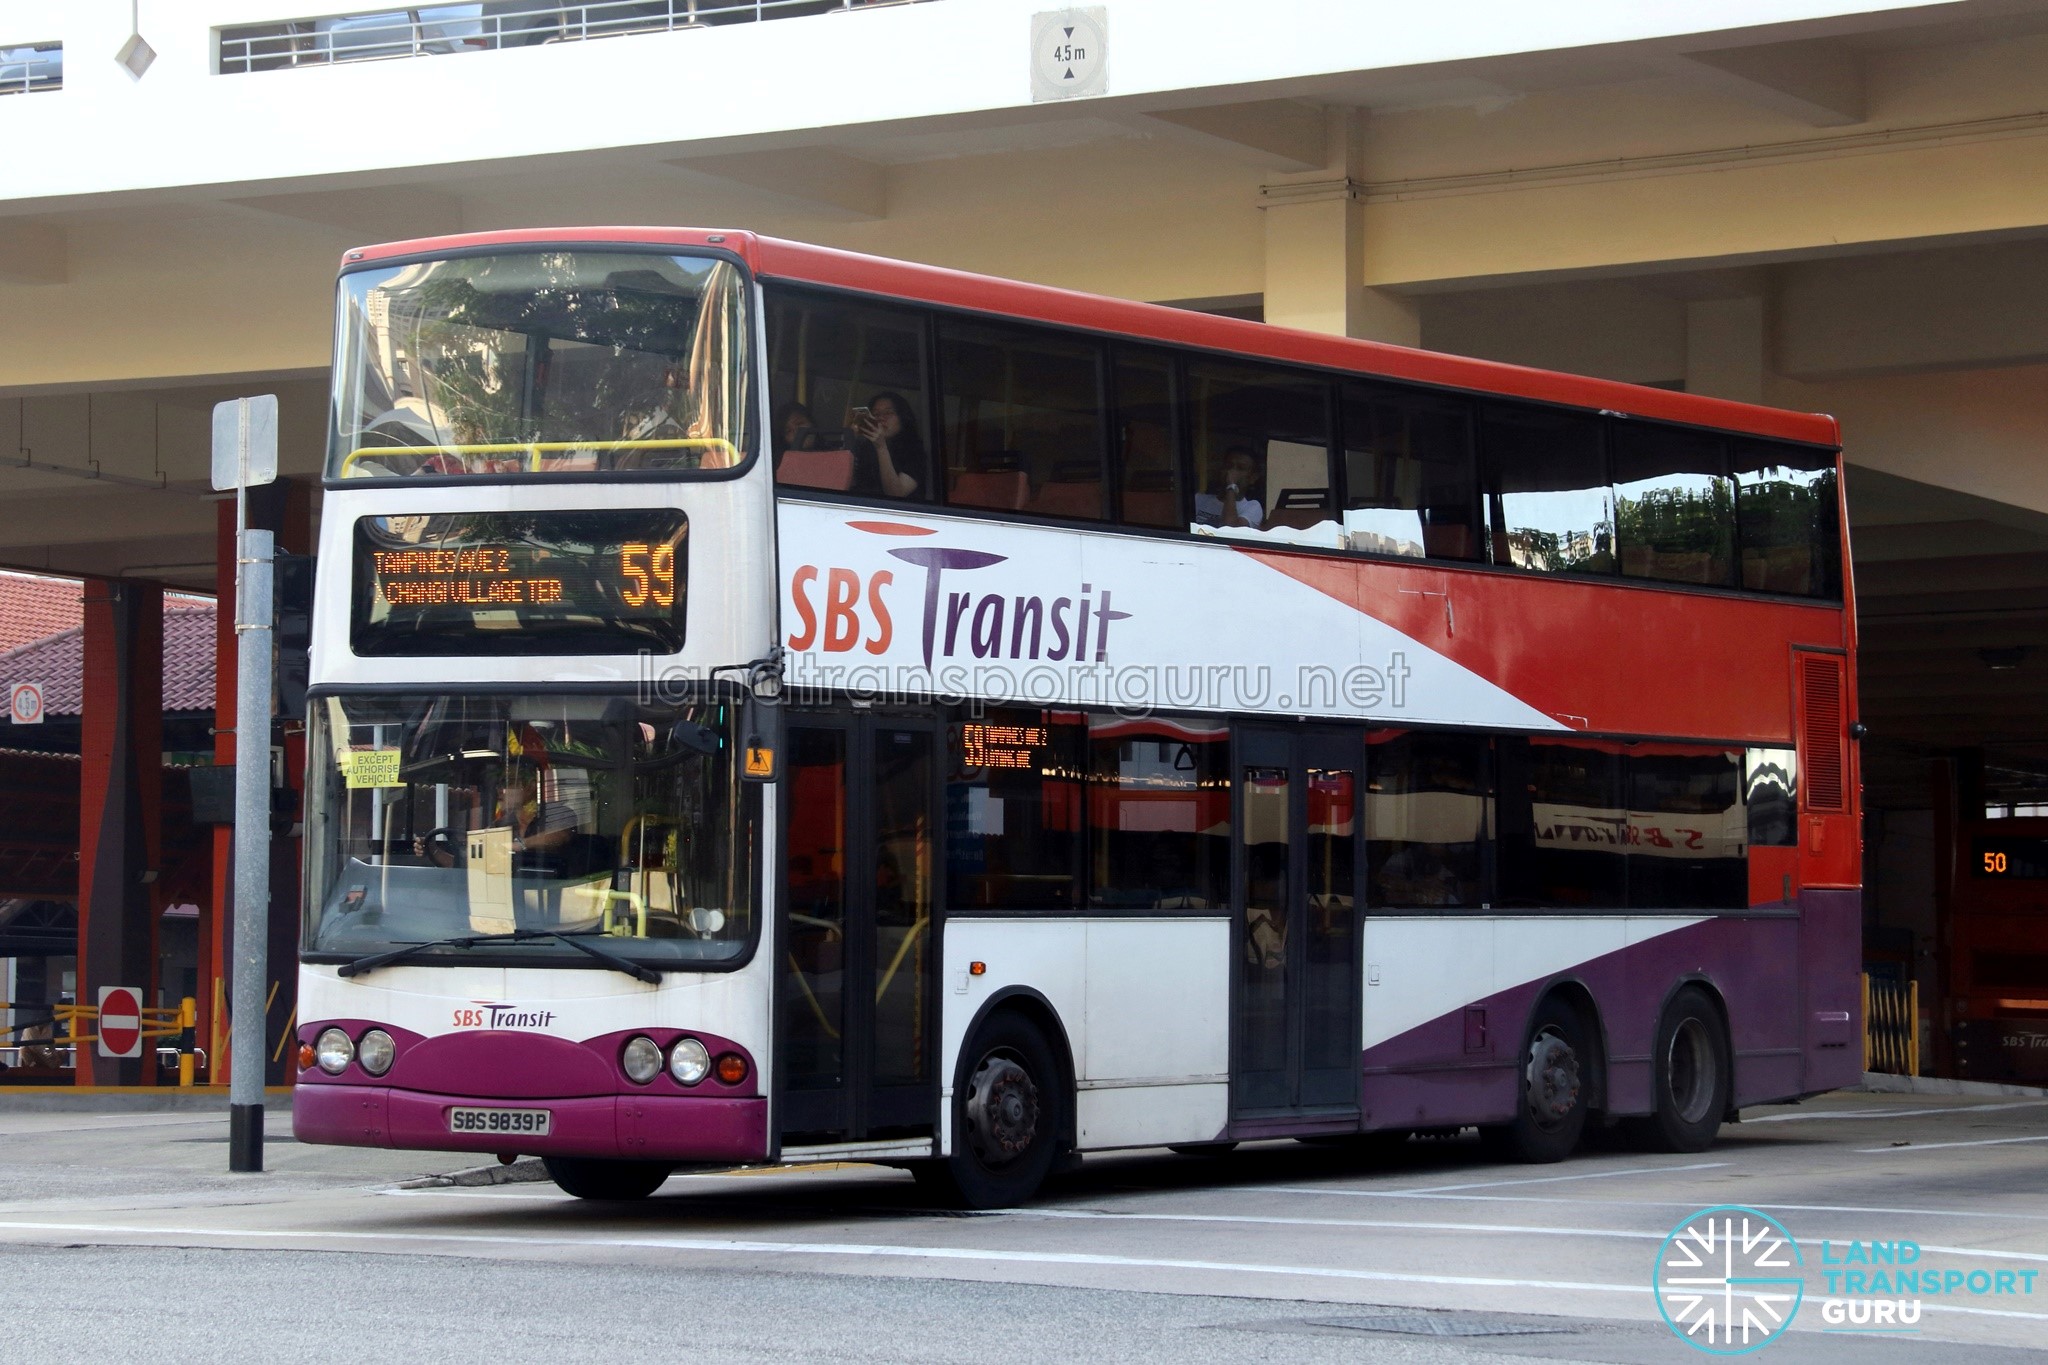 bus 59 last trip